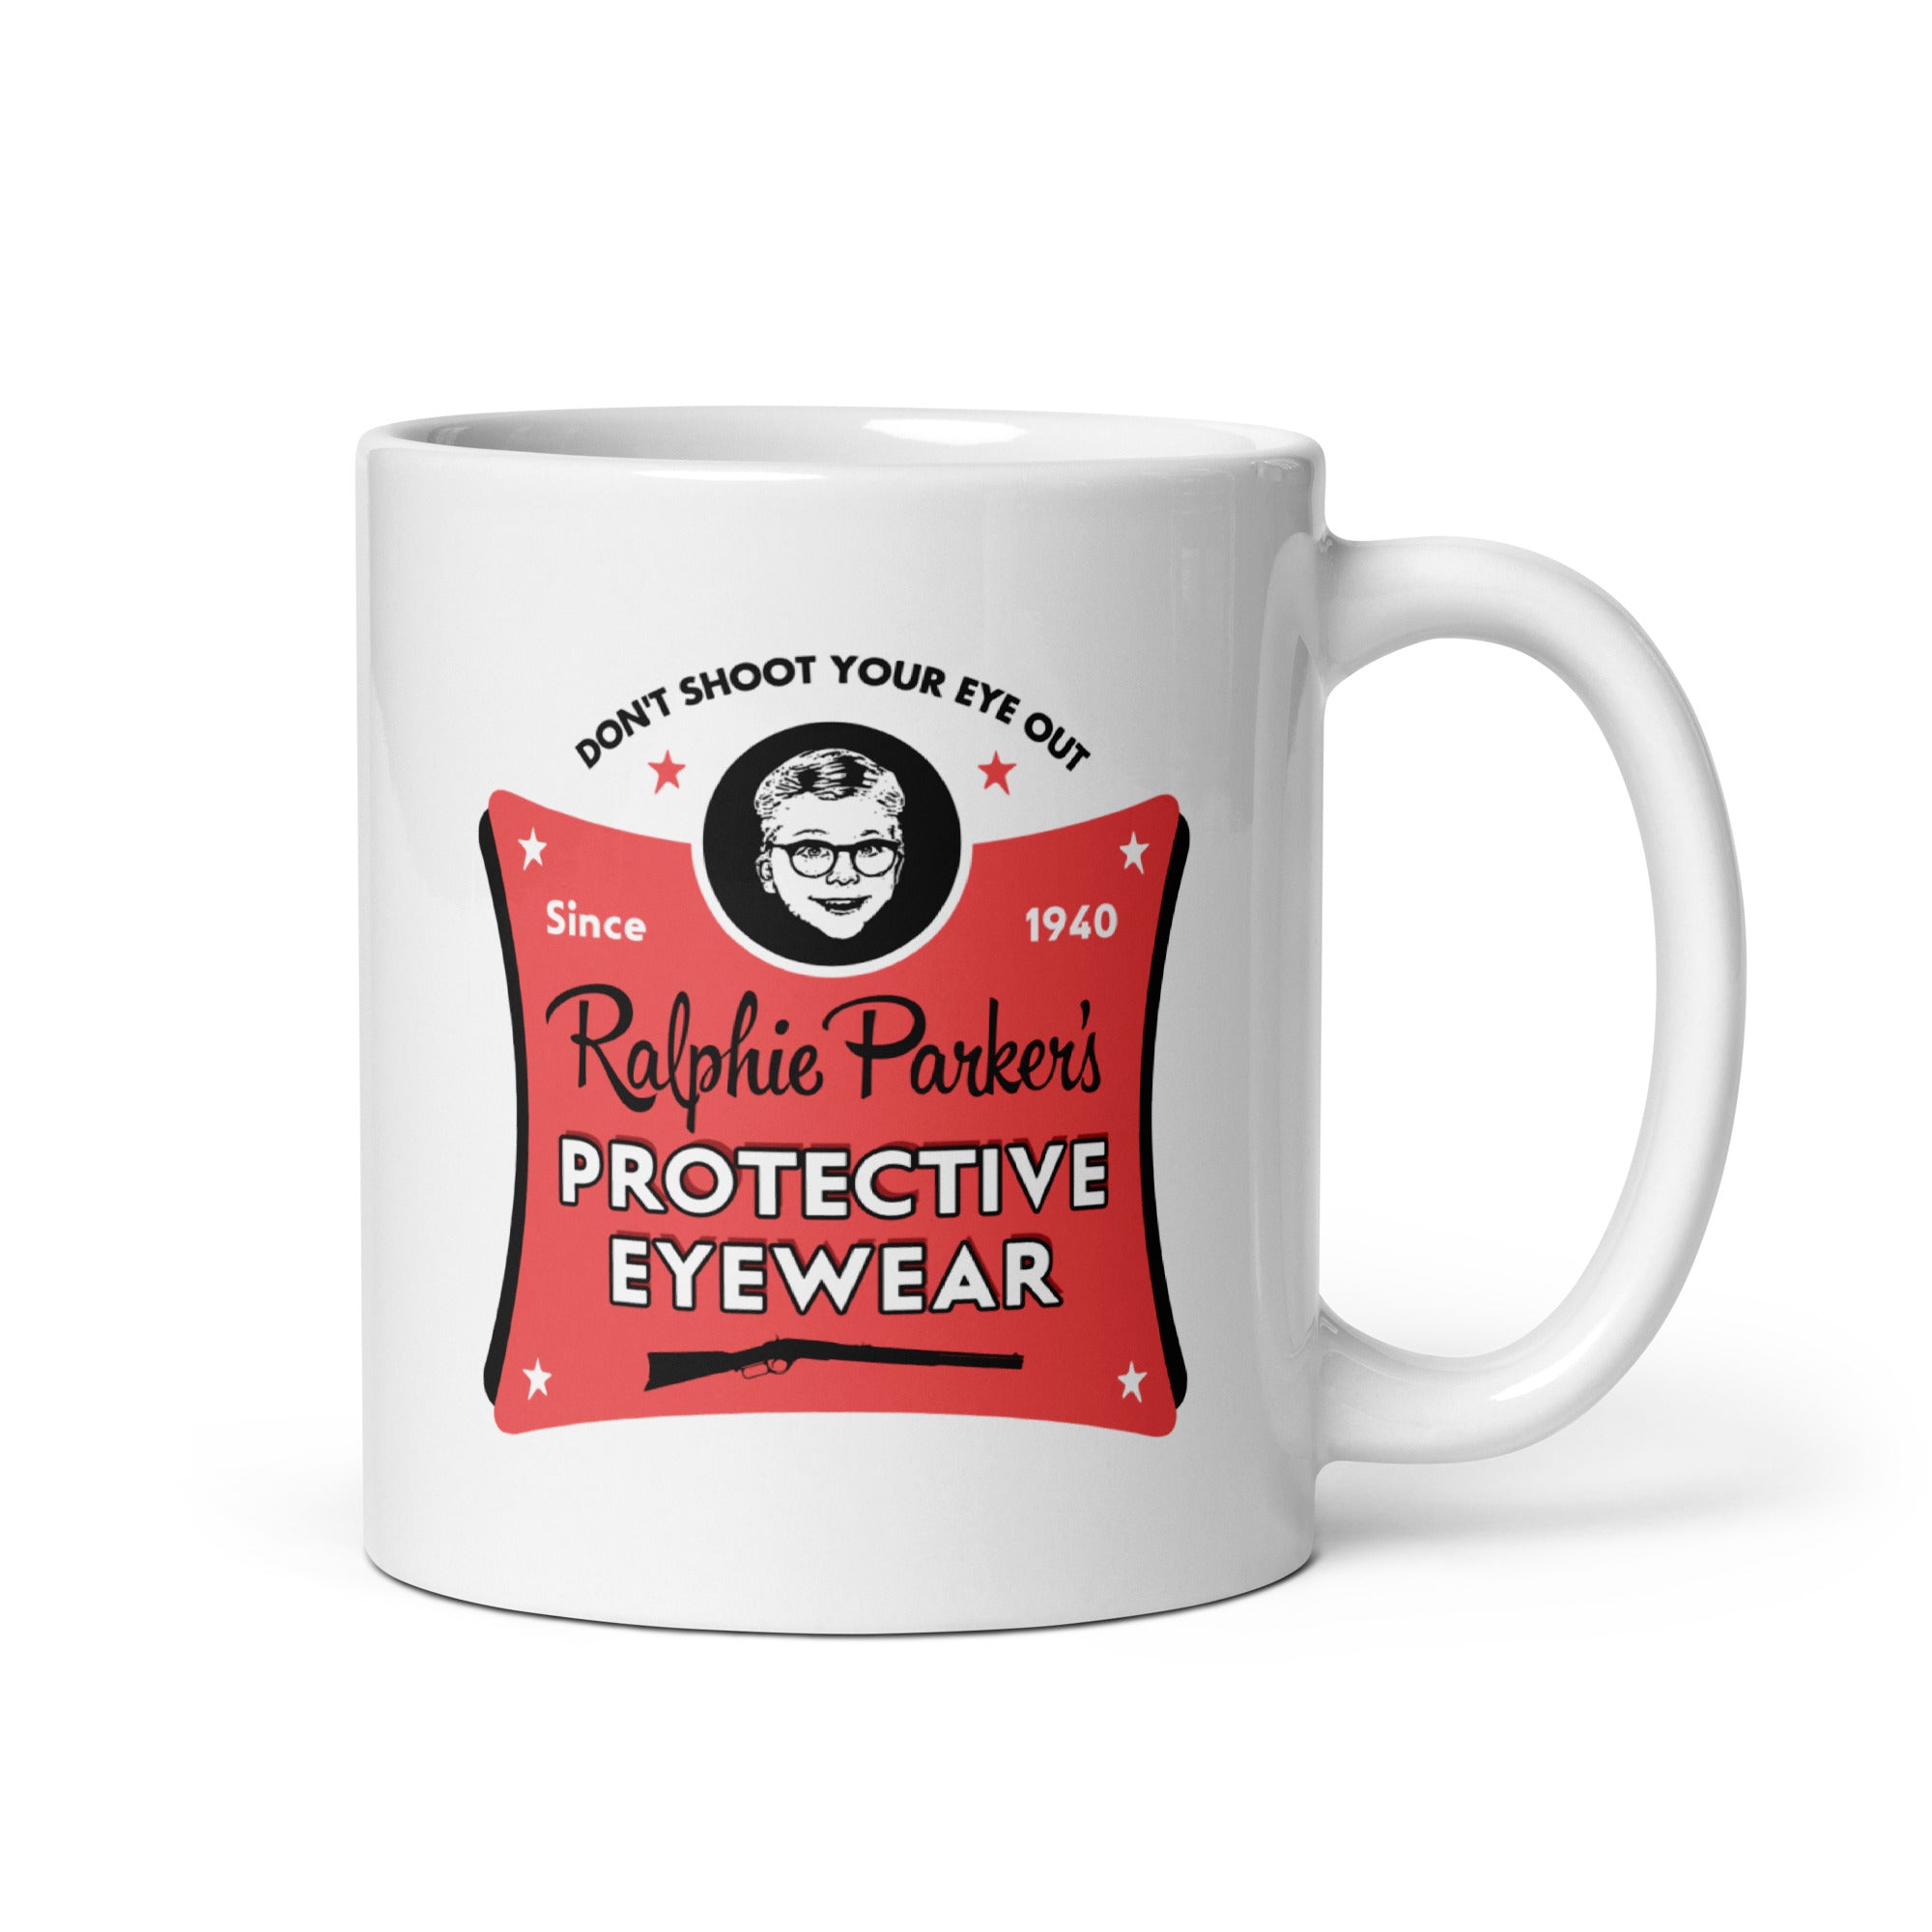 Ralphie Parker's Protective Eyewear - 11oz Coffee Mug